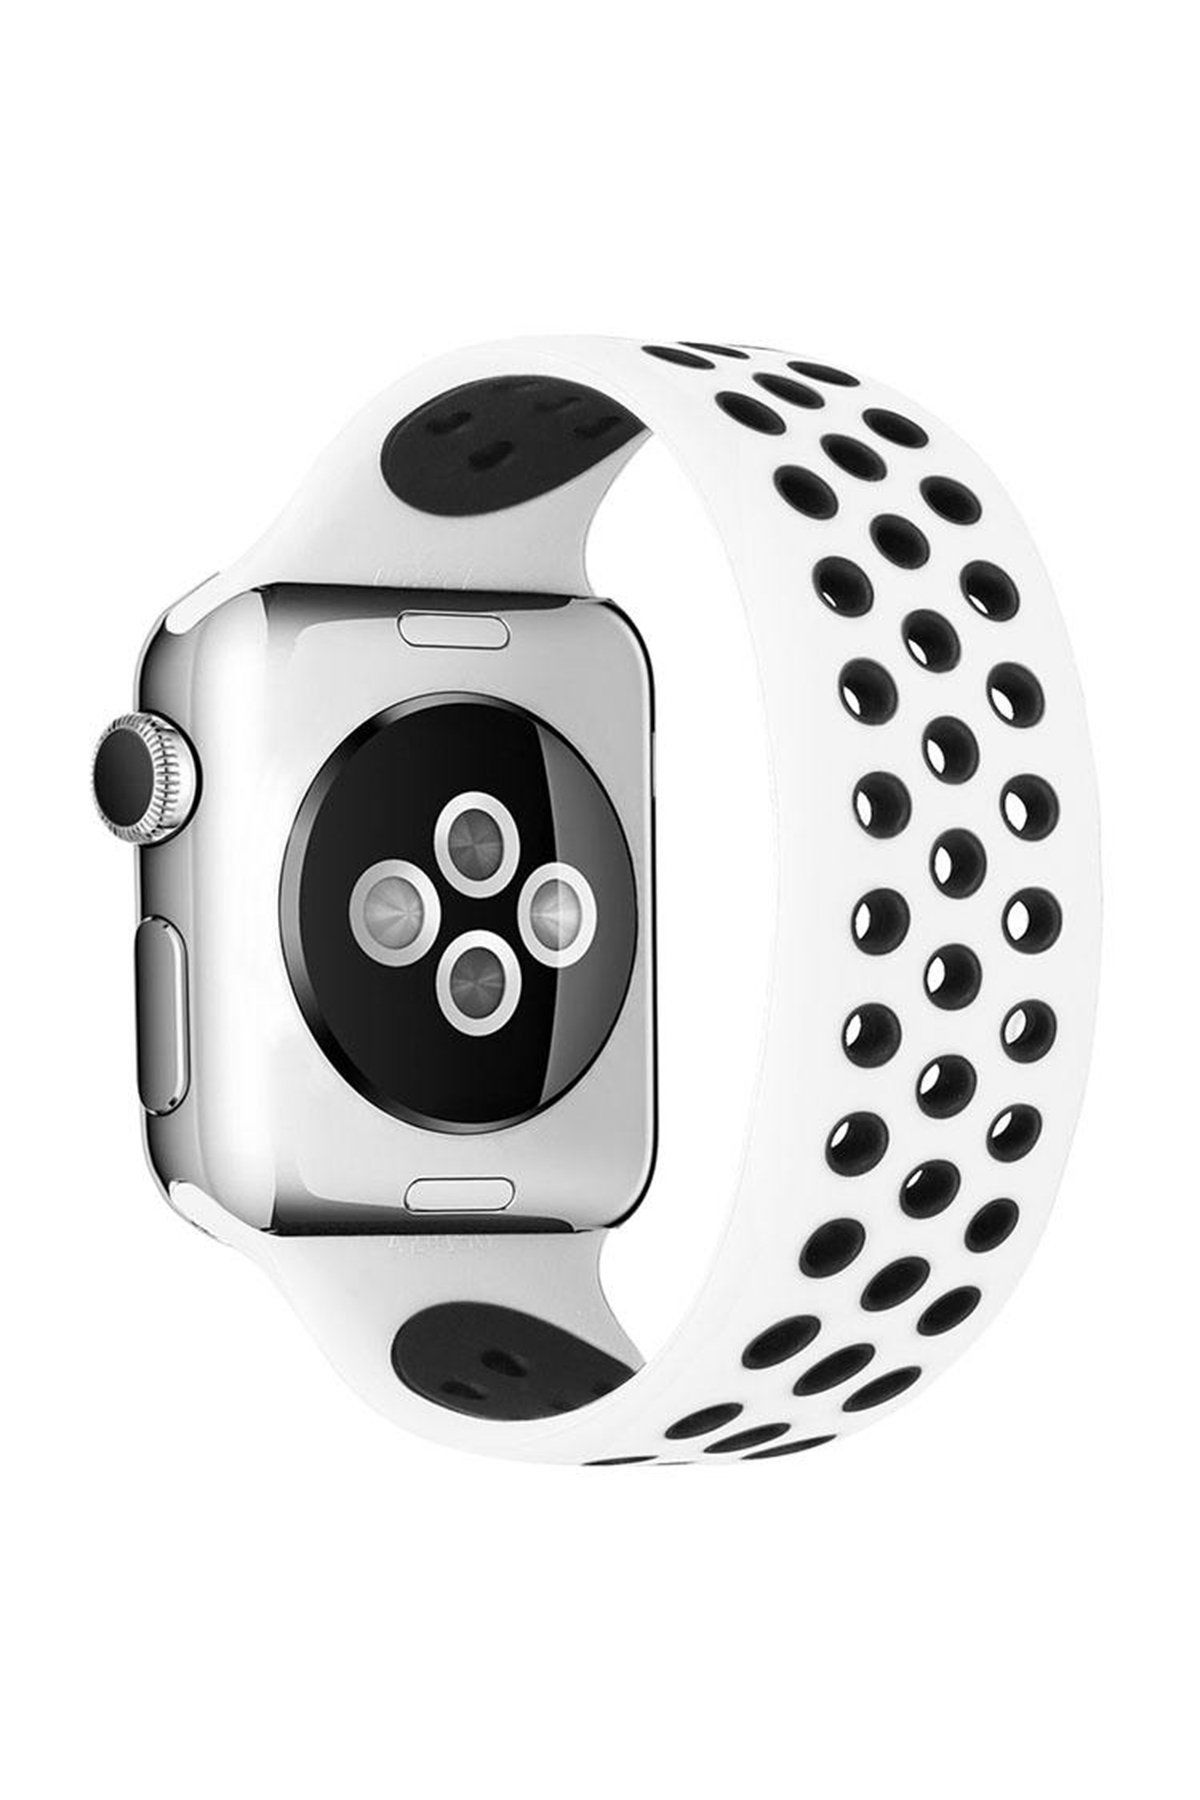 Newface Apple Watch 38mm Ayarlı Delikli Silikon Kordon - Beyaz-Siyah